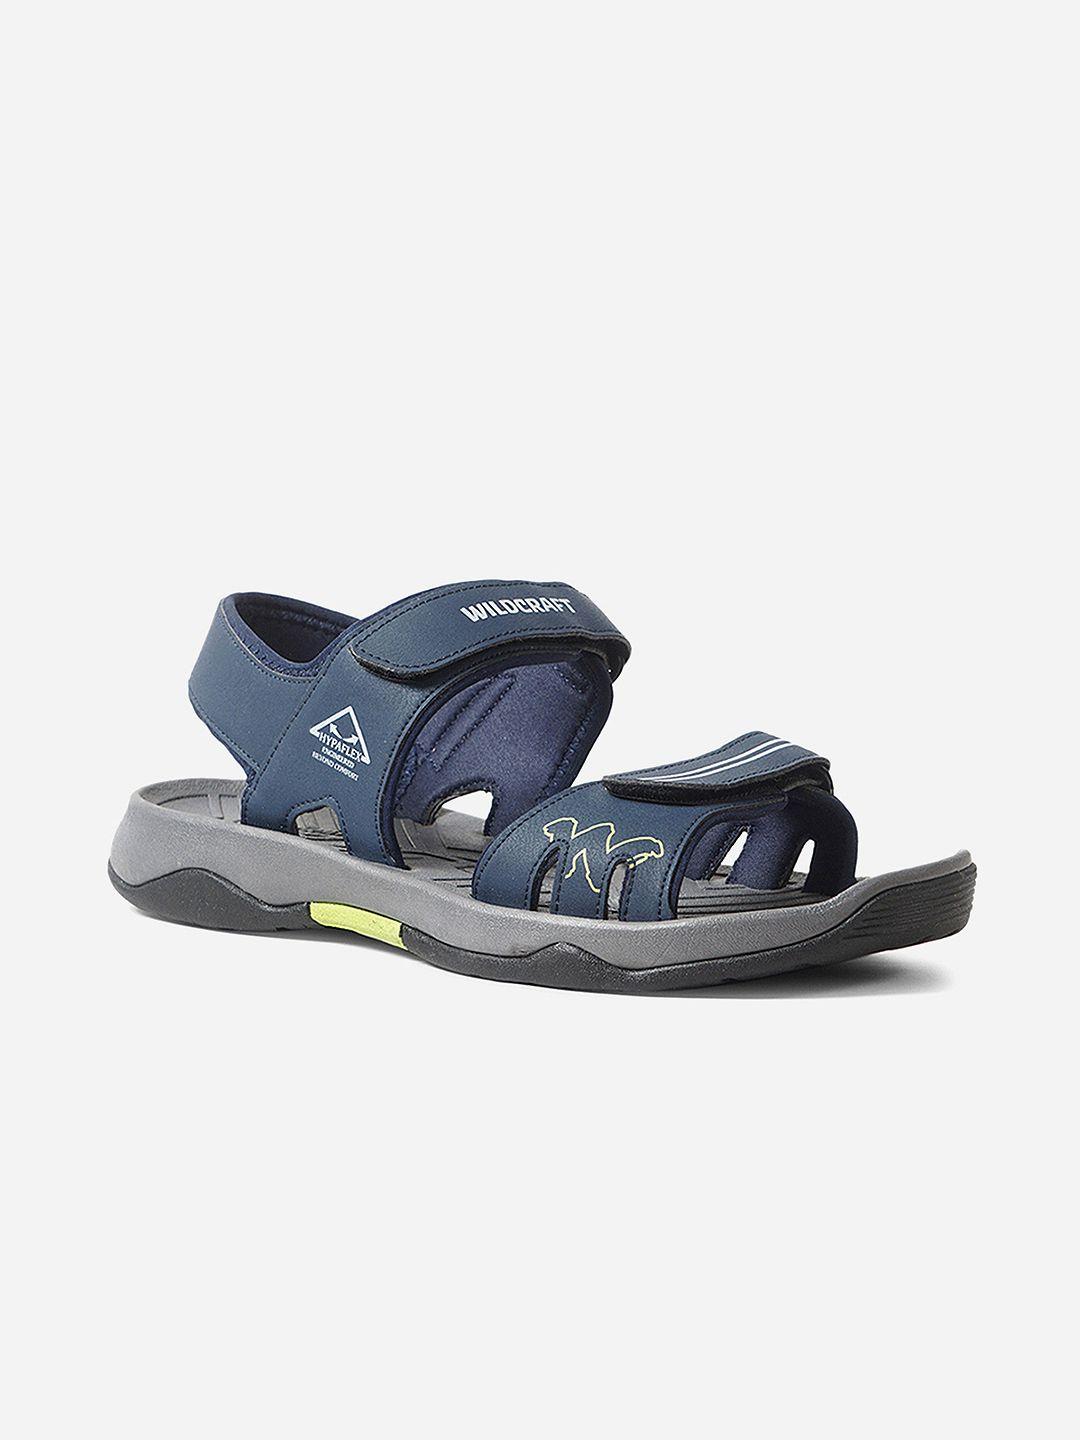 wildcraft men navy blue & grey ride pu comfort sandals engineered with hypaflex technology